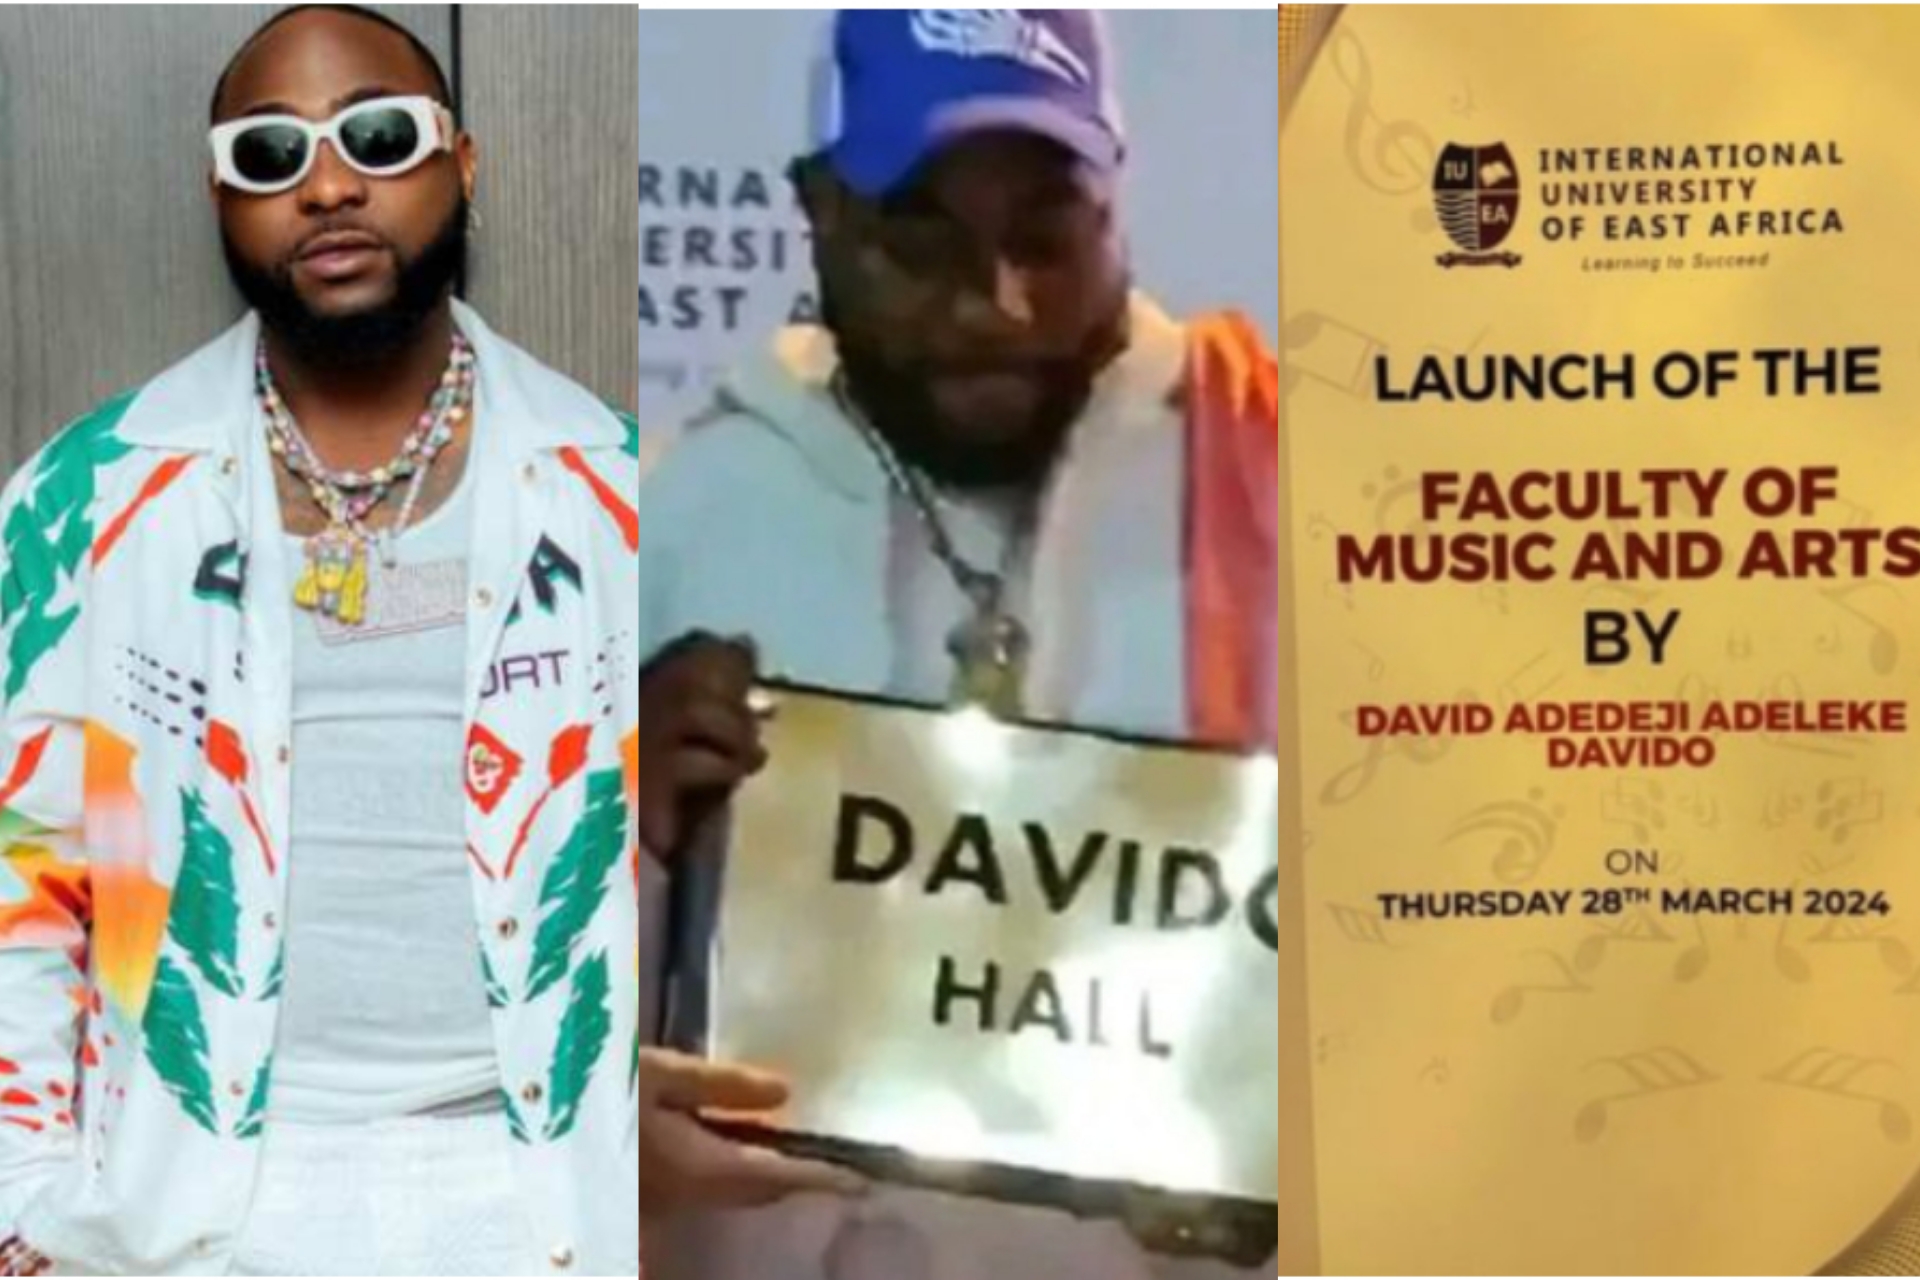 Davido launches new music course at the International University in Kampala, Uganda